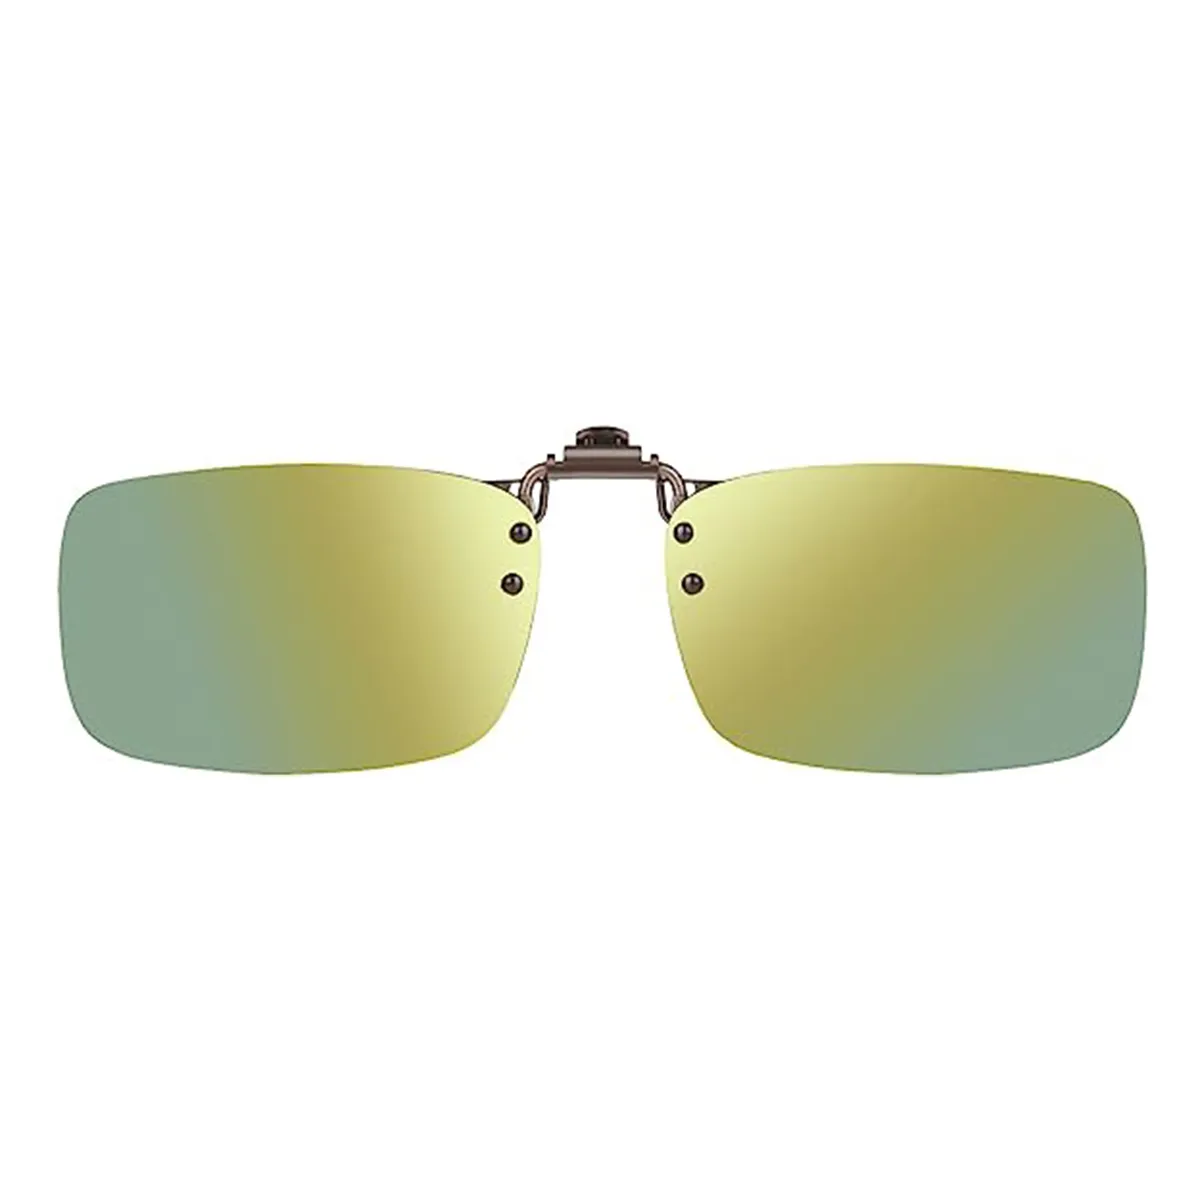 Clip-M - Rectangle Gold Clip On Sunglasses for Men & Women